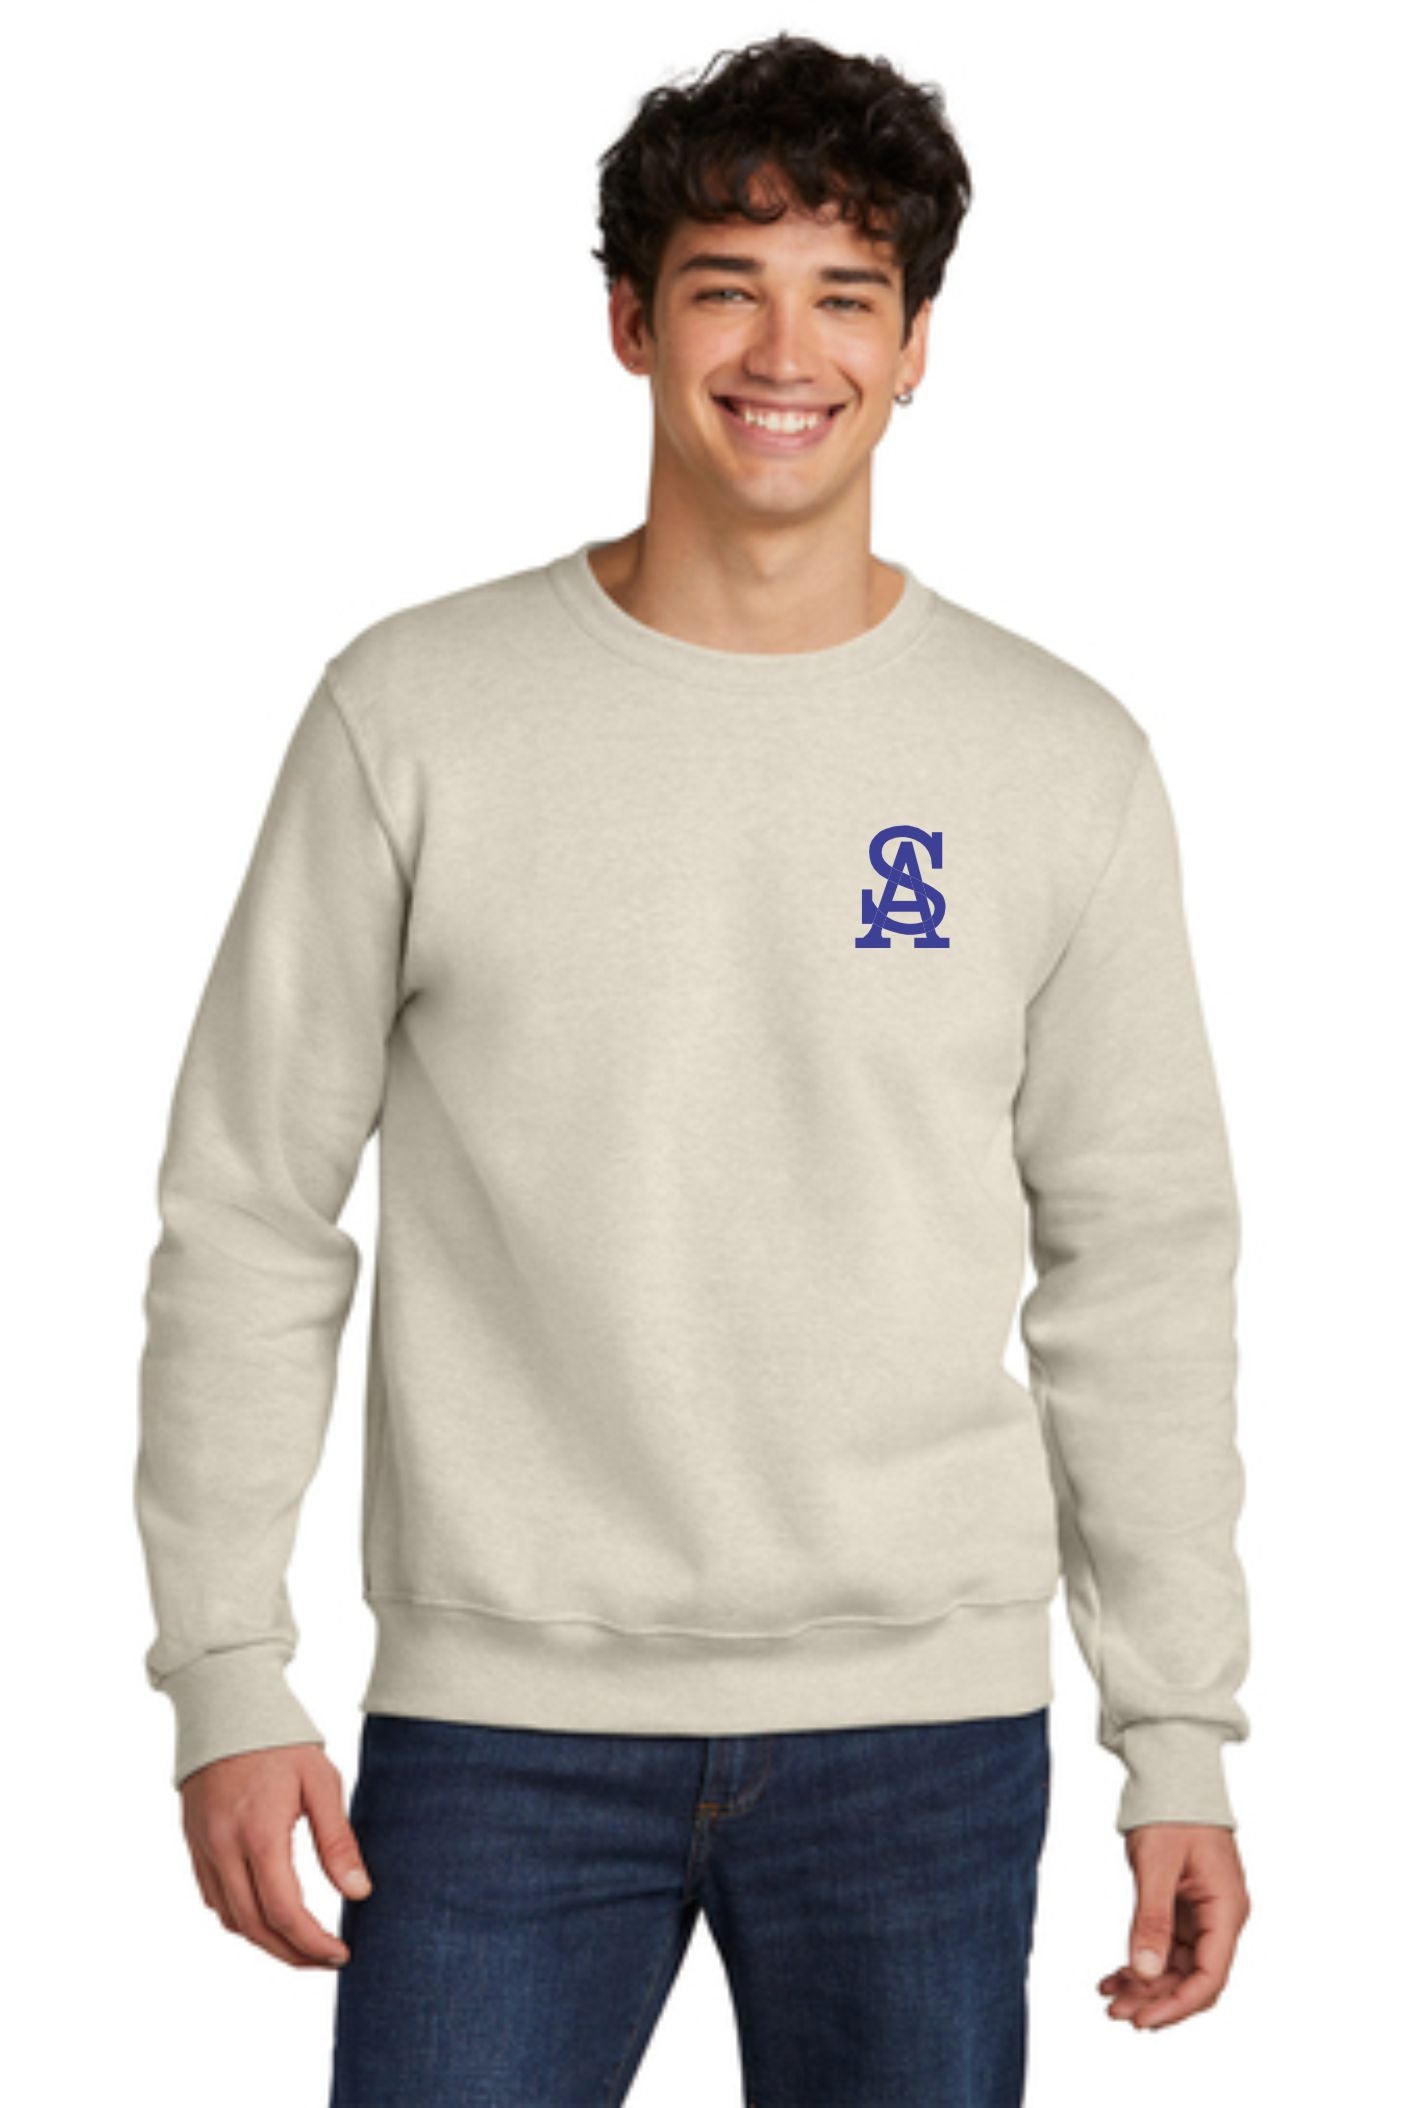 Saint Agnes Winter Crewneck Sweatshirts